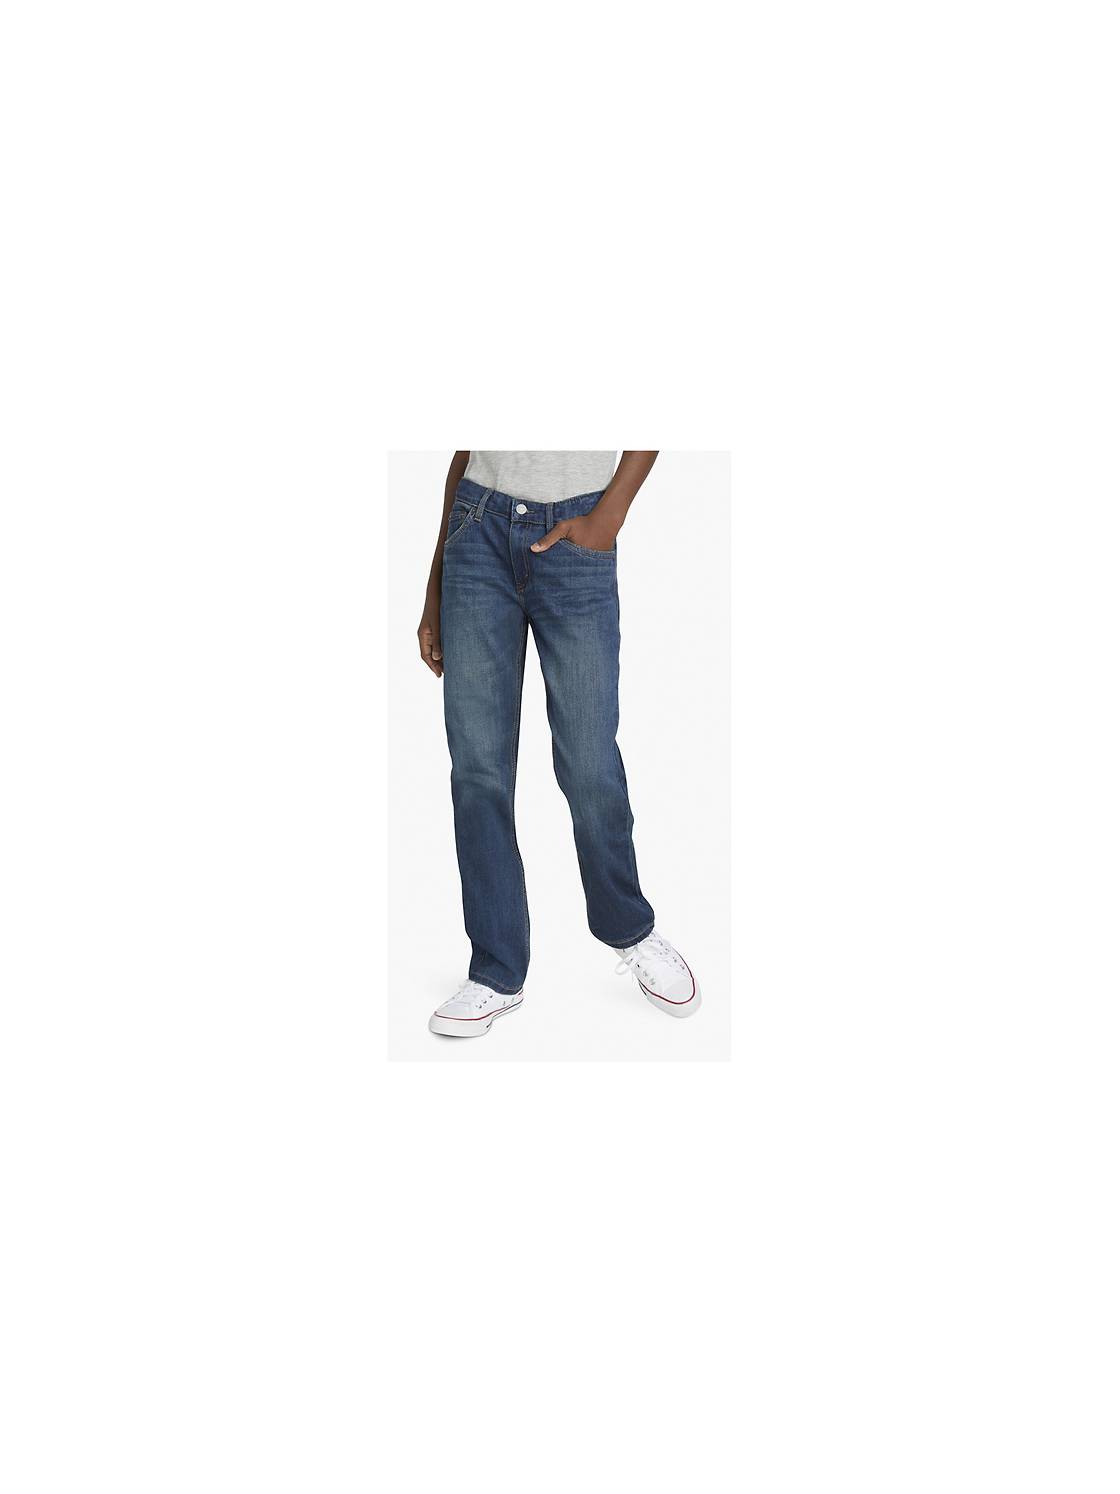 Little Levi's 565 Brown Denim Jeans Youth Boys Size 7 Orange Tab 21x19 USA  Made